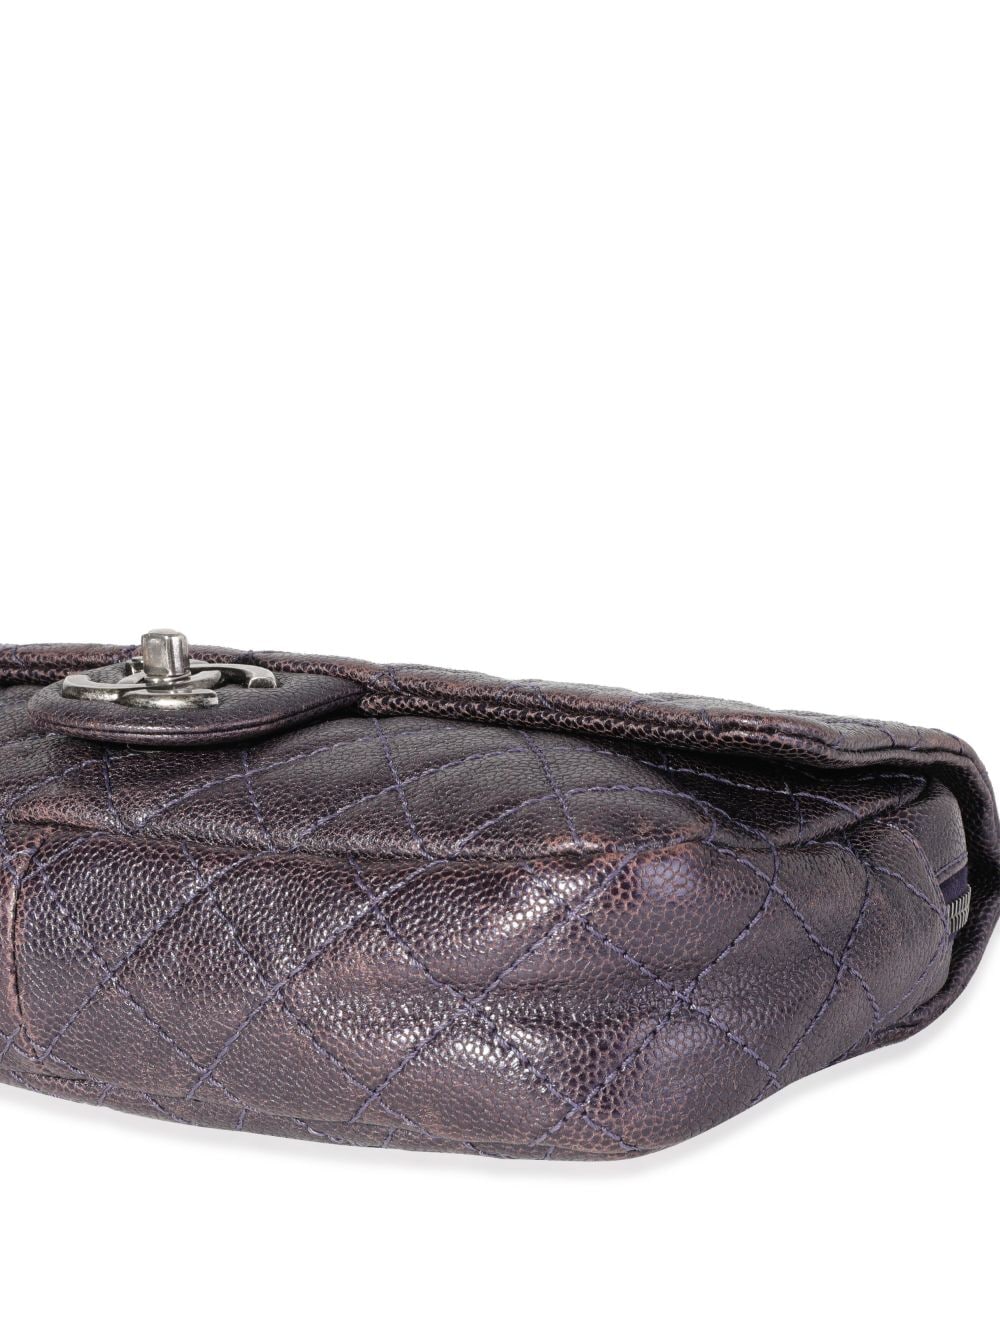 Chanel Crave Cc medium flag bag, Women's Fashion, Bags & Wallets